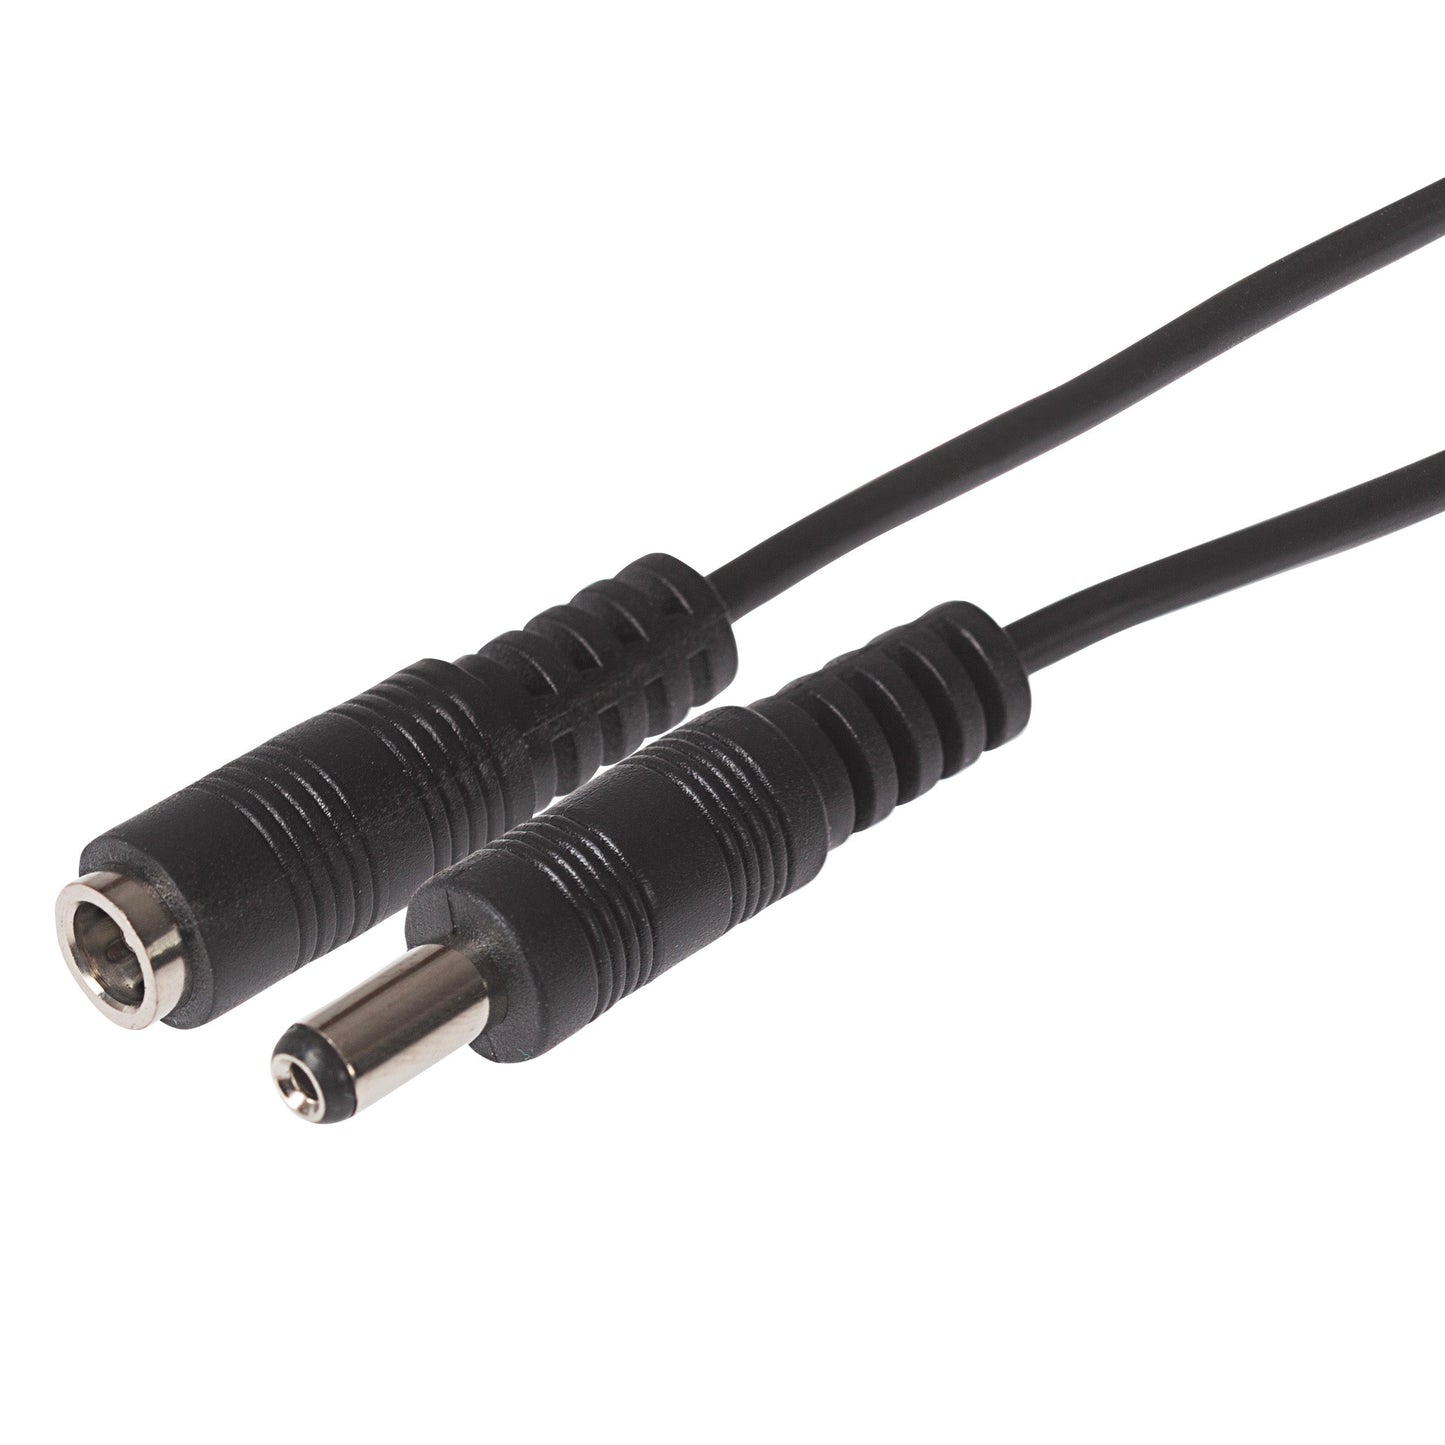 MPS Power Supply Extension Lead 2.5mm x 5.5mm Plug to 2.5mm x 5.5mm Socket - Black, 5m - maplin.co.uk